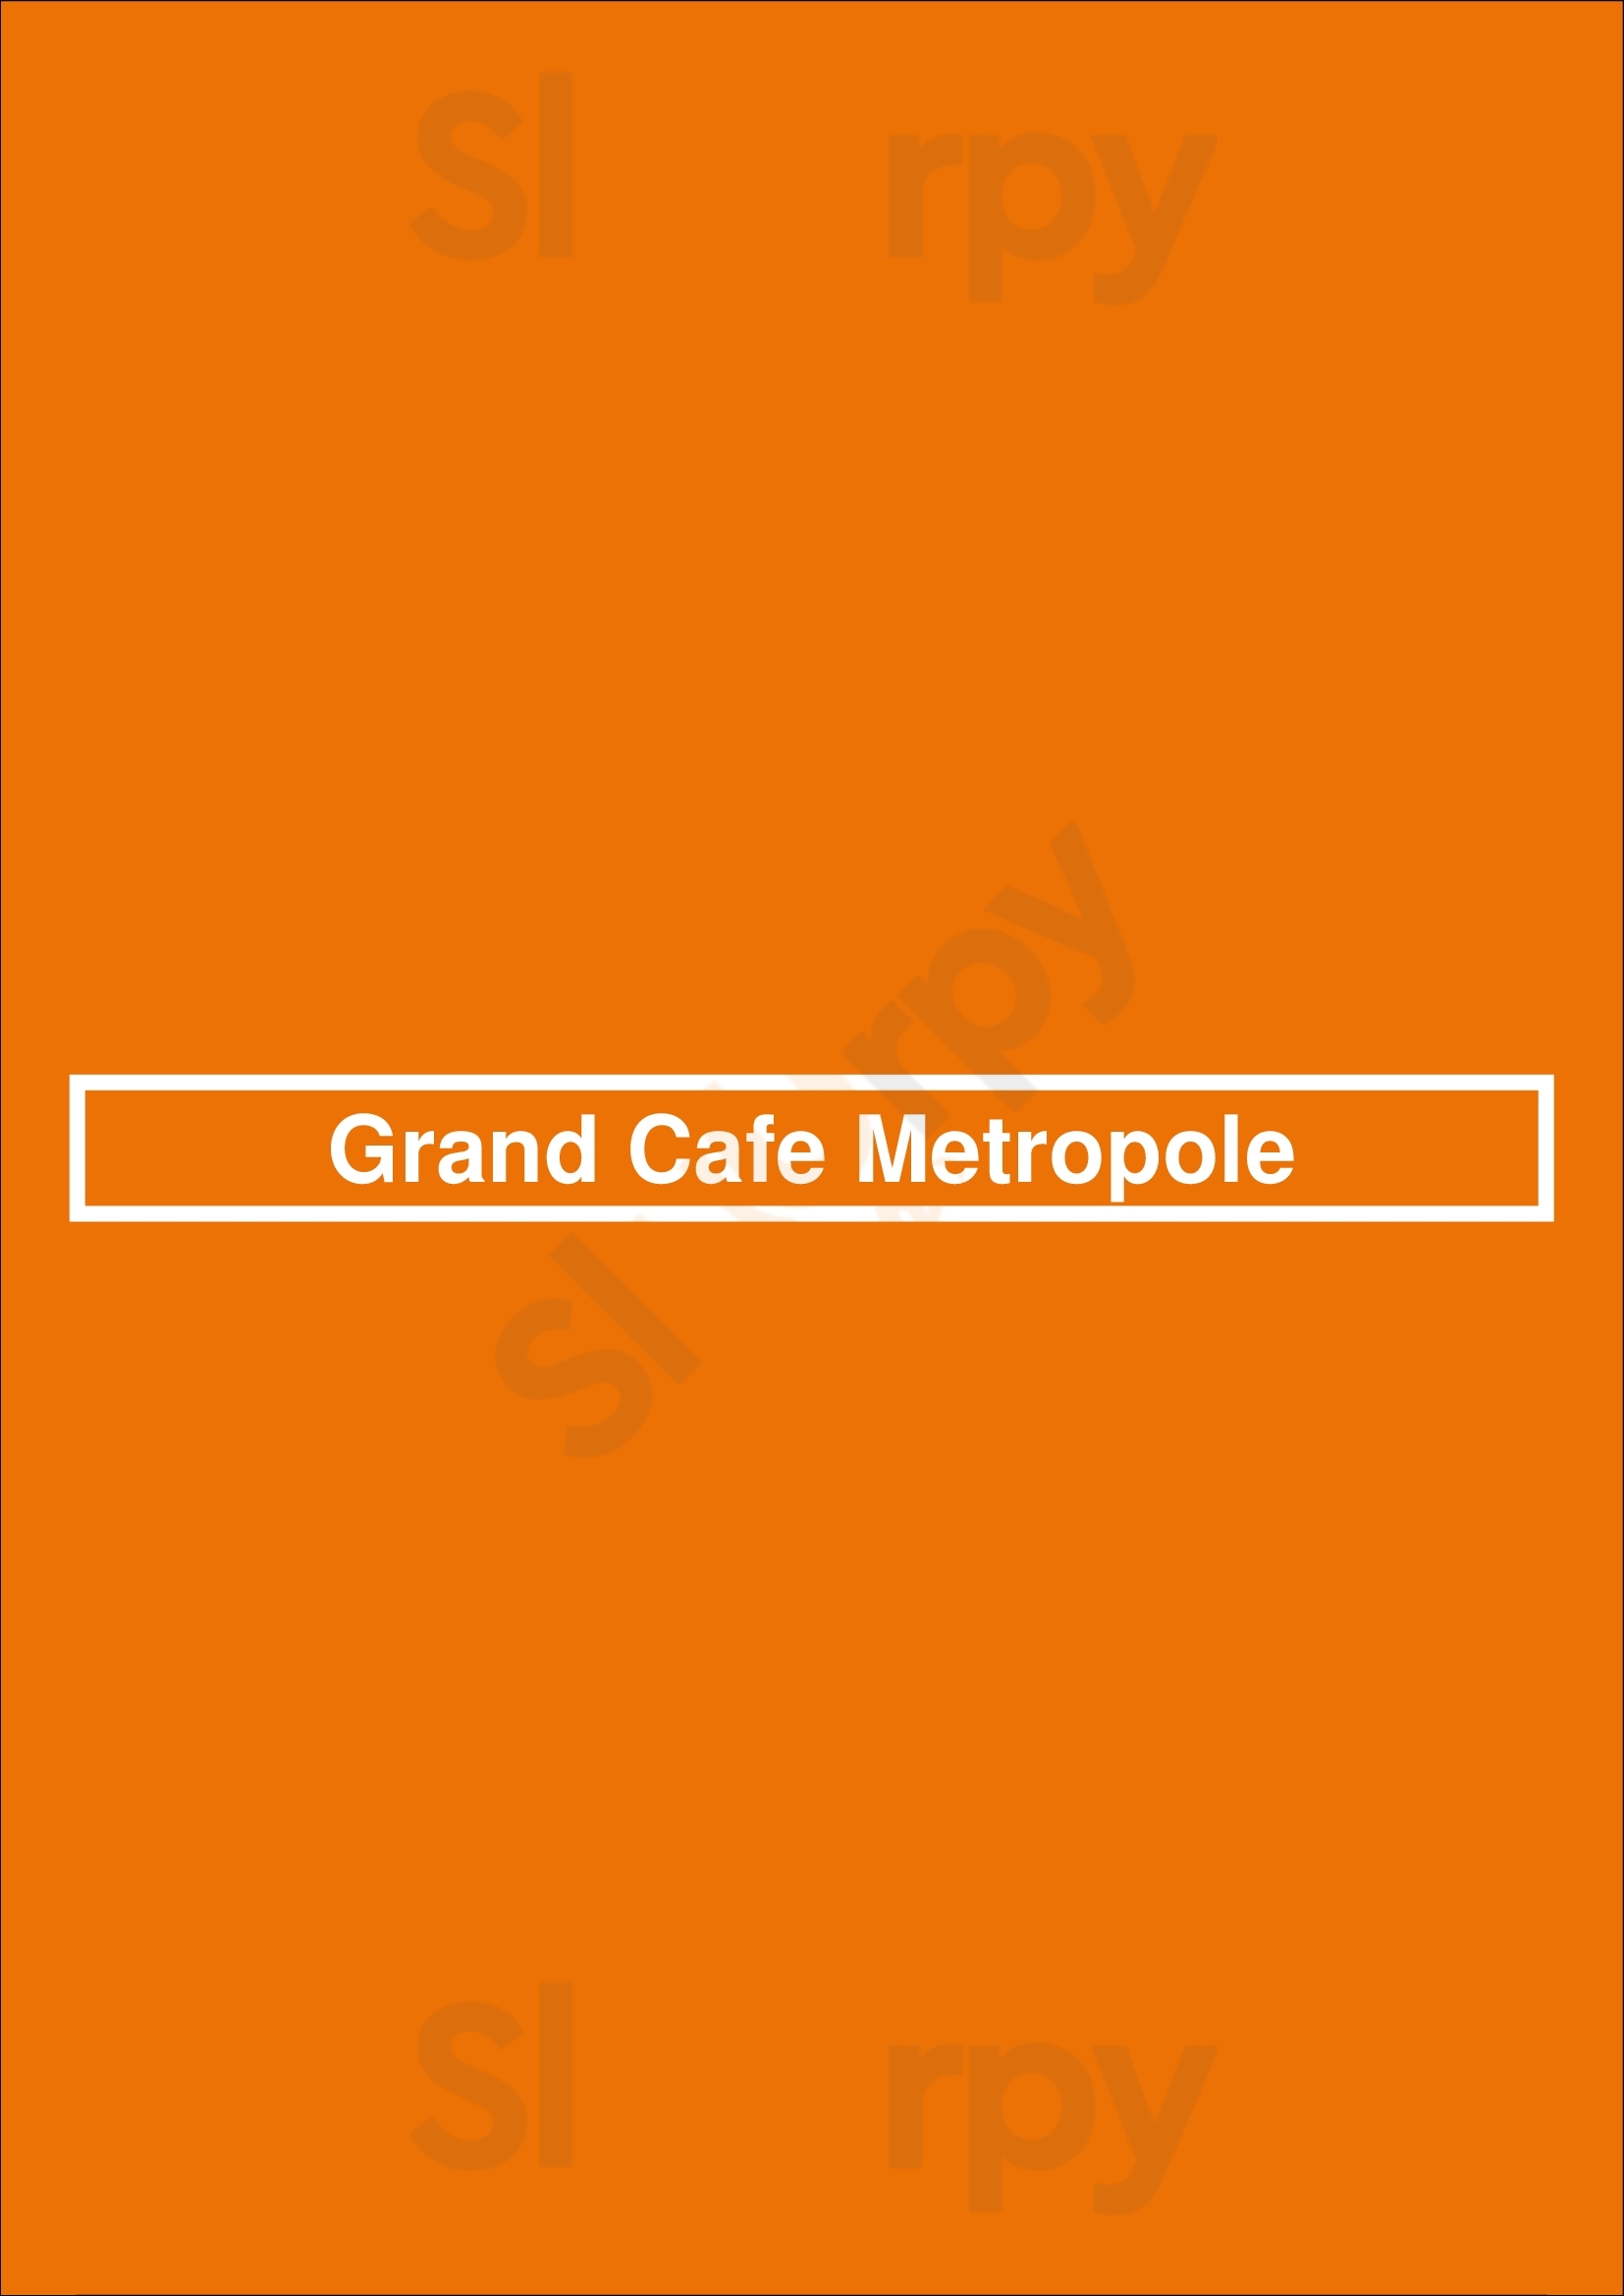 Grand Cafe Metropole Arnhem Menu - 1